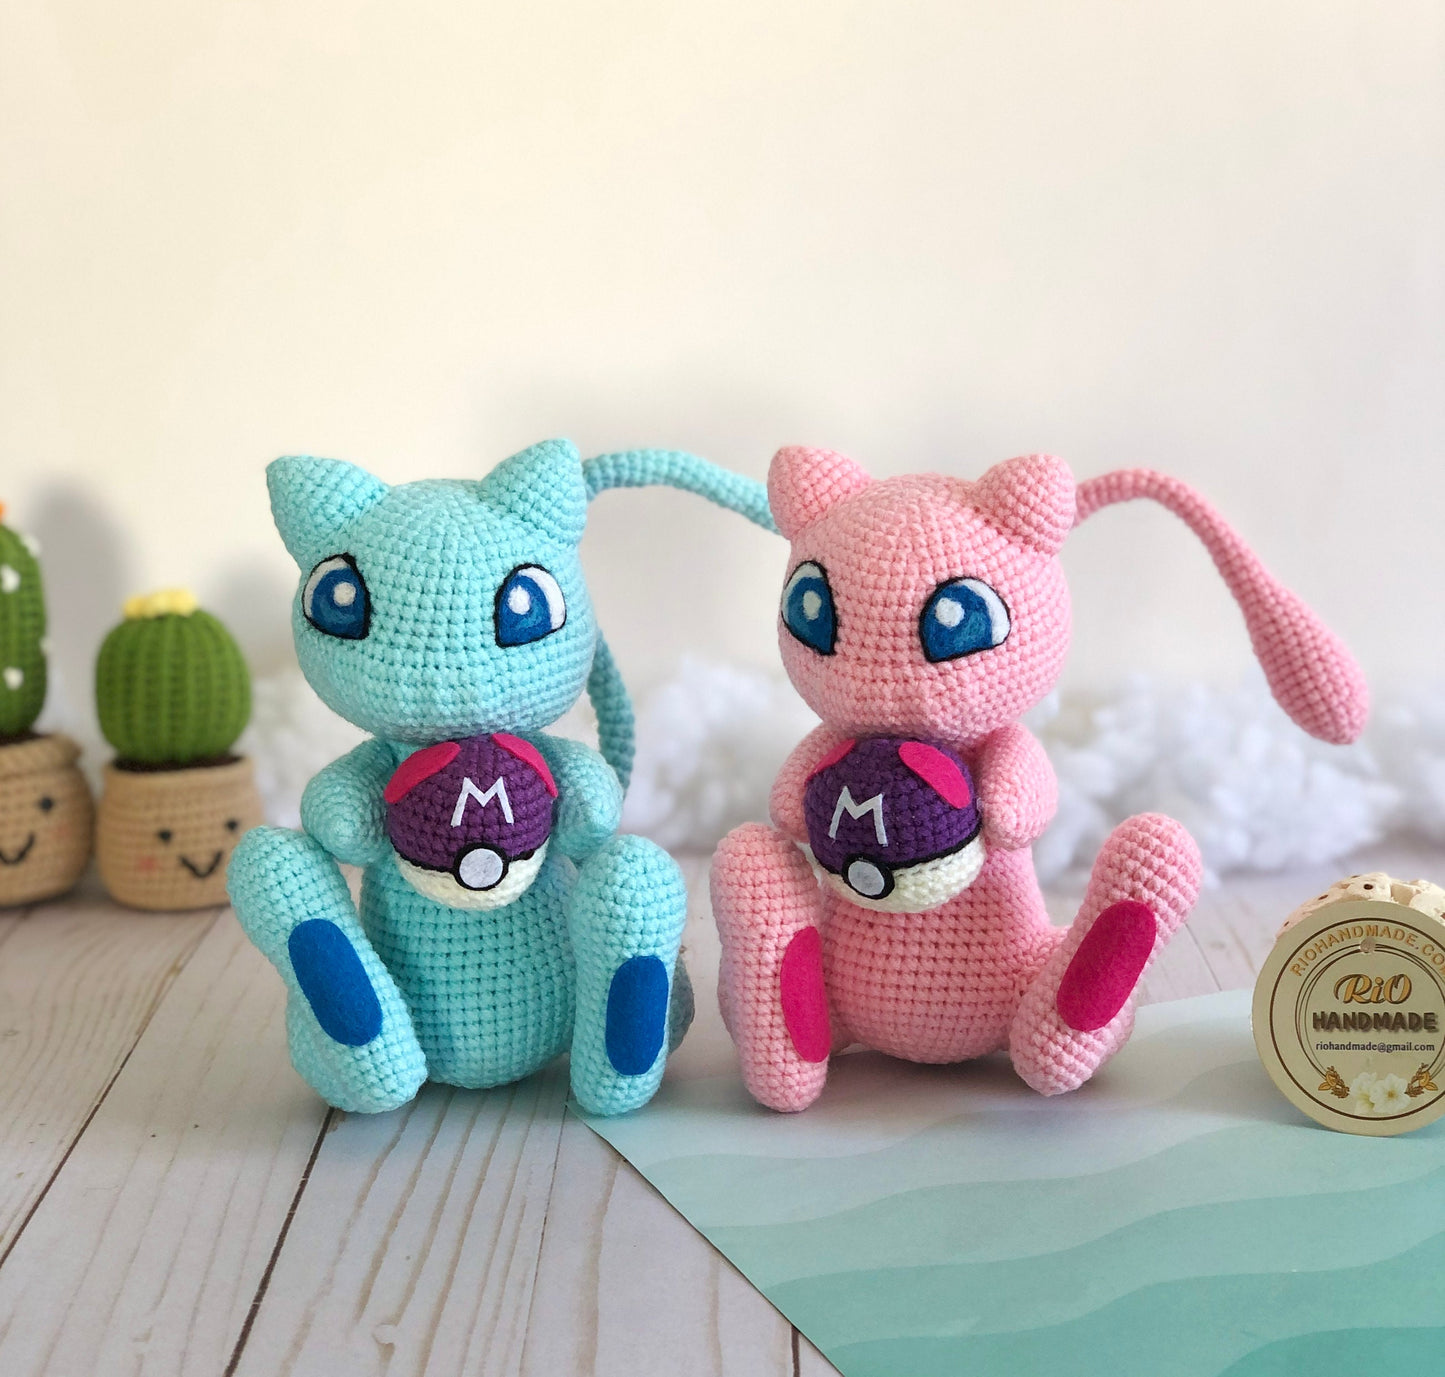 Rio Handmade  Mew, Crochet Mew with ball, Inspired Chibi Pokemon, Amigurumi Toy, cute Toy, adult hobby